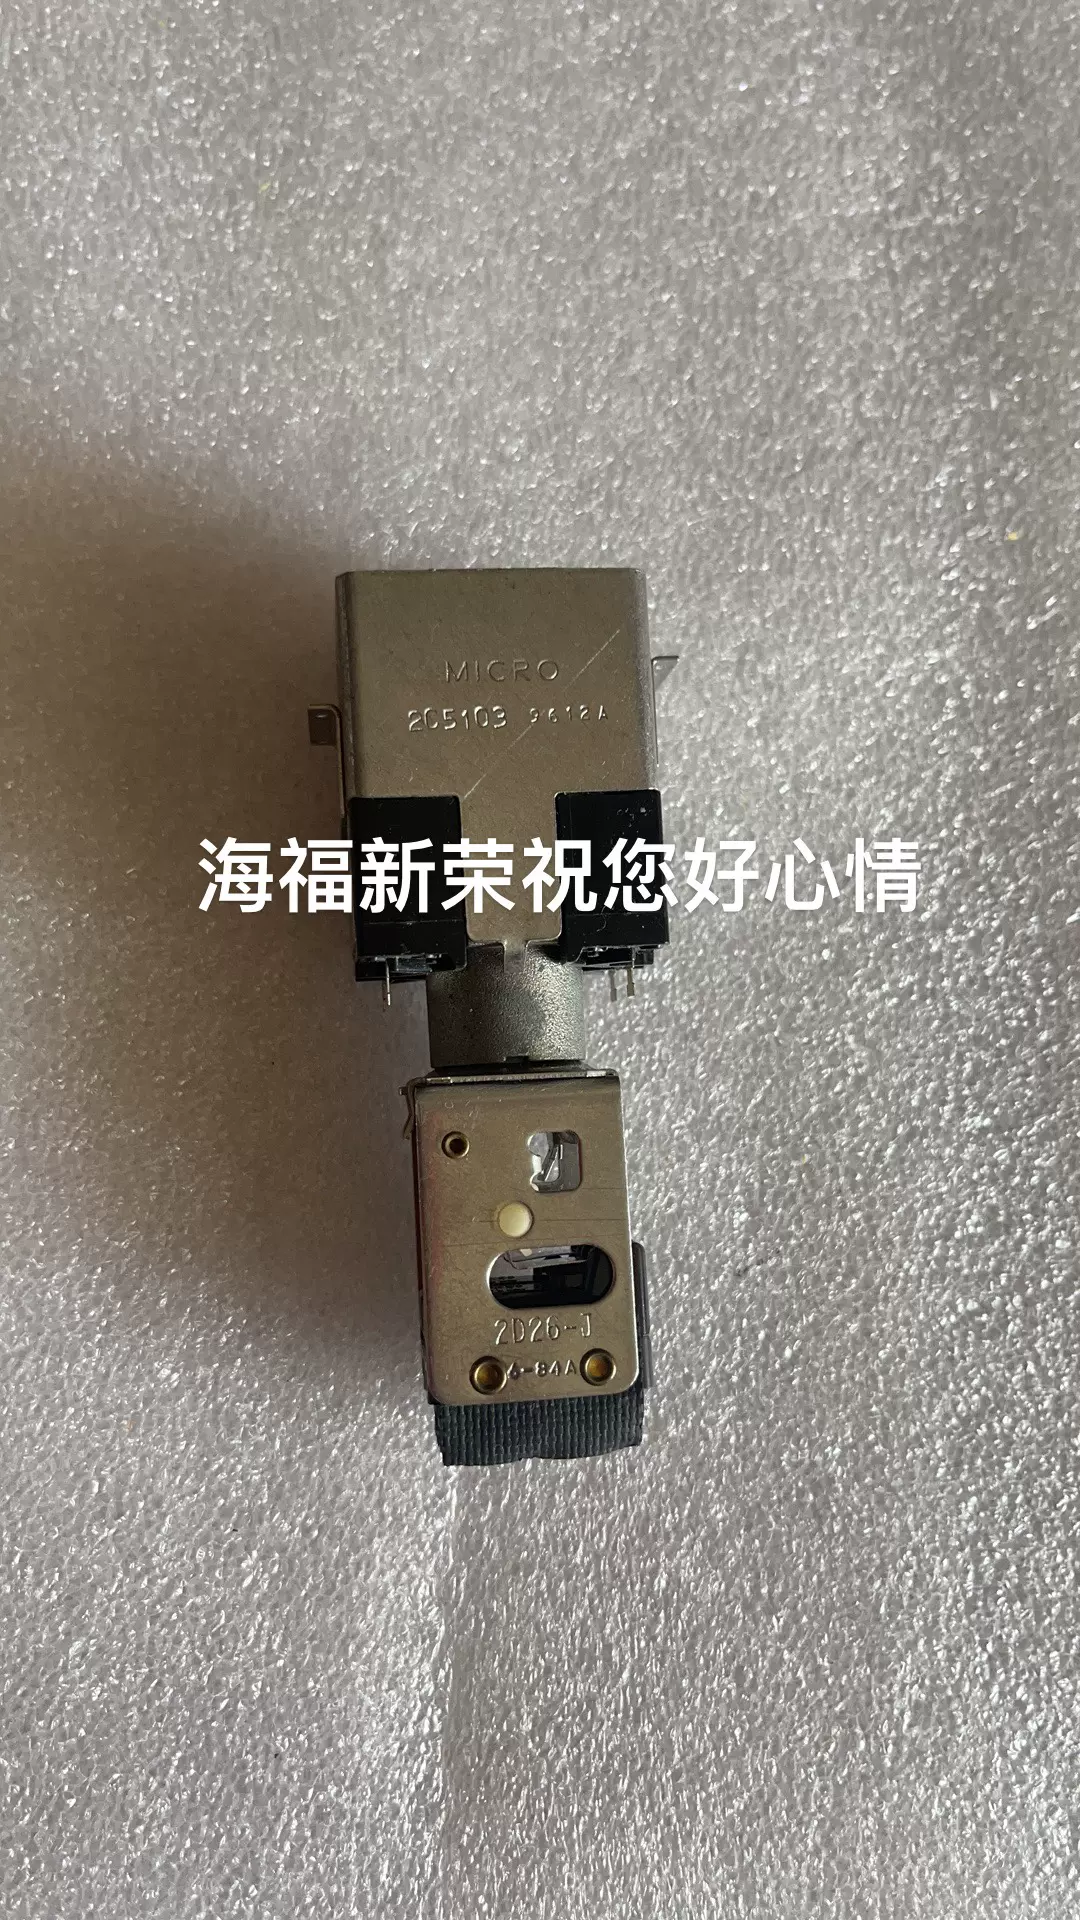 2C5103 9612A 262D-J 6-84A MICRO X109标价非实价拍前请咨询-Taobao